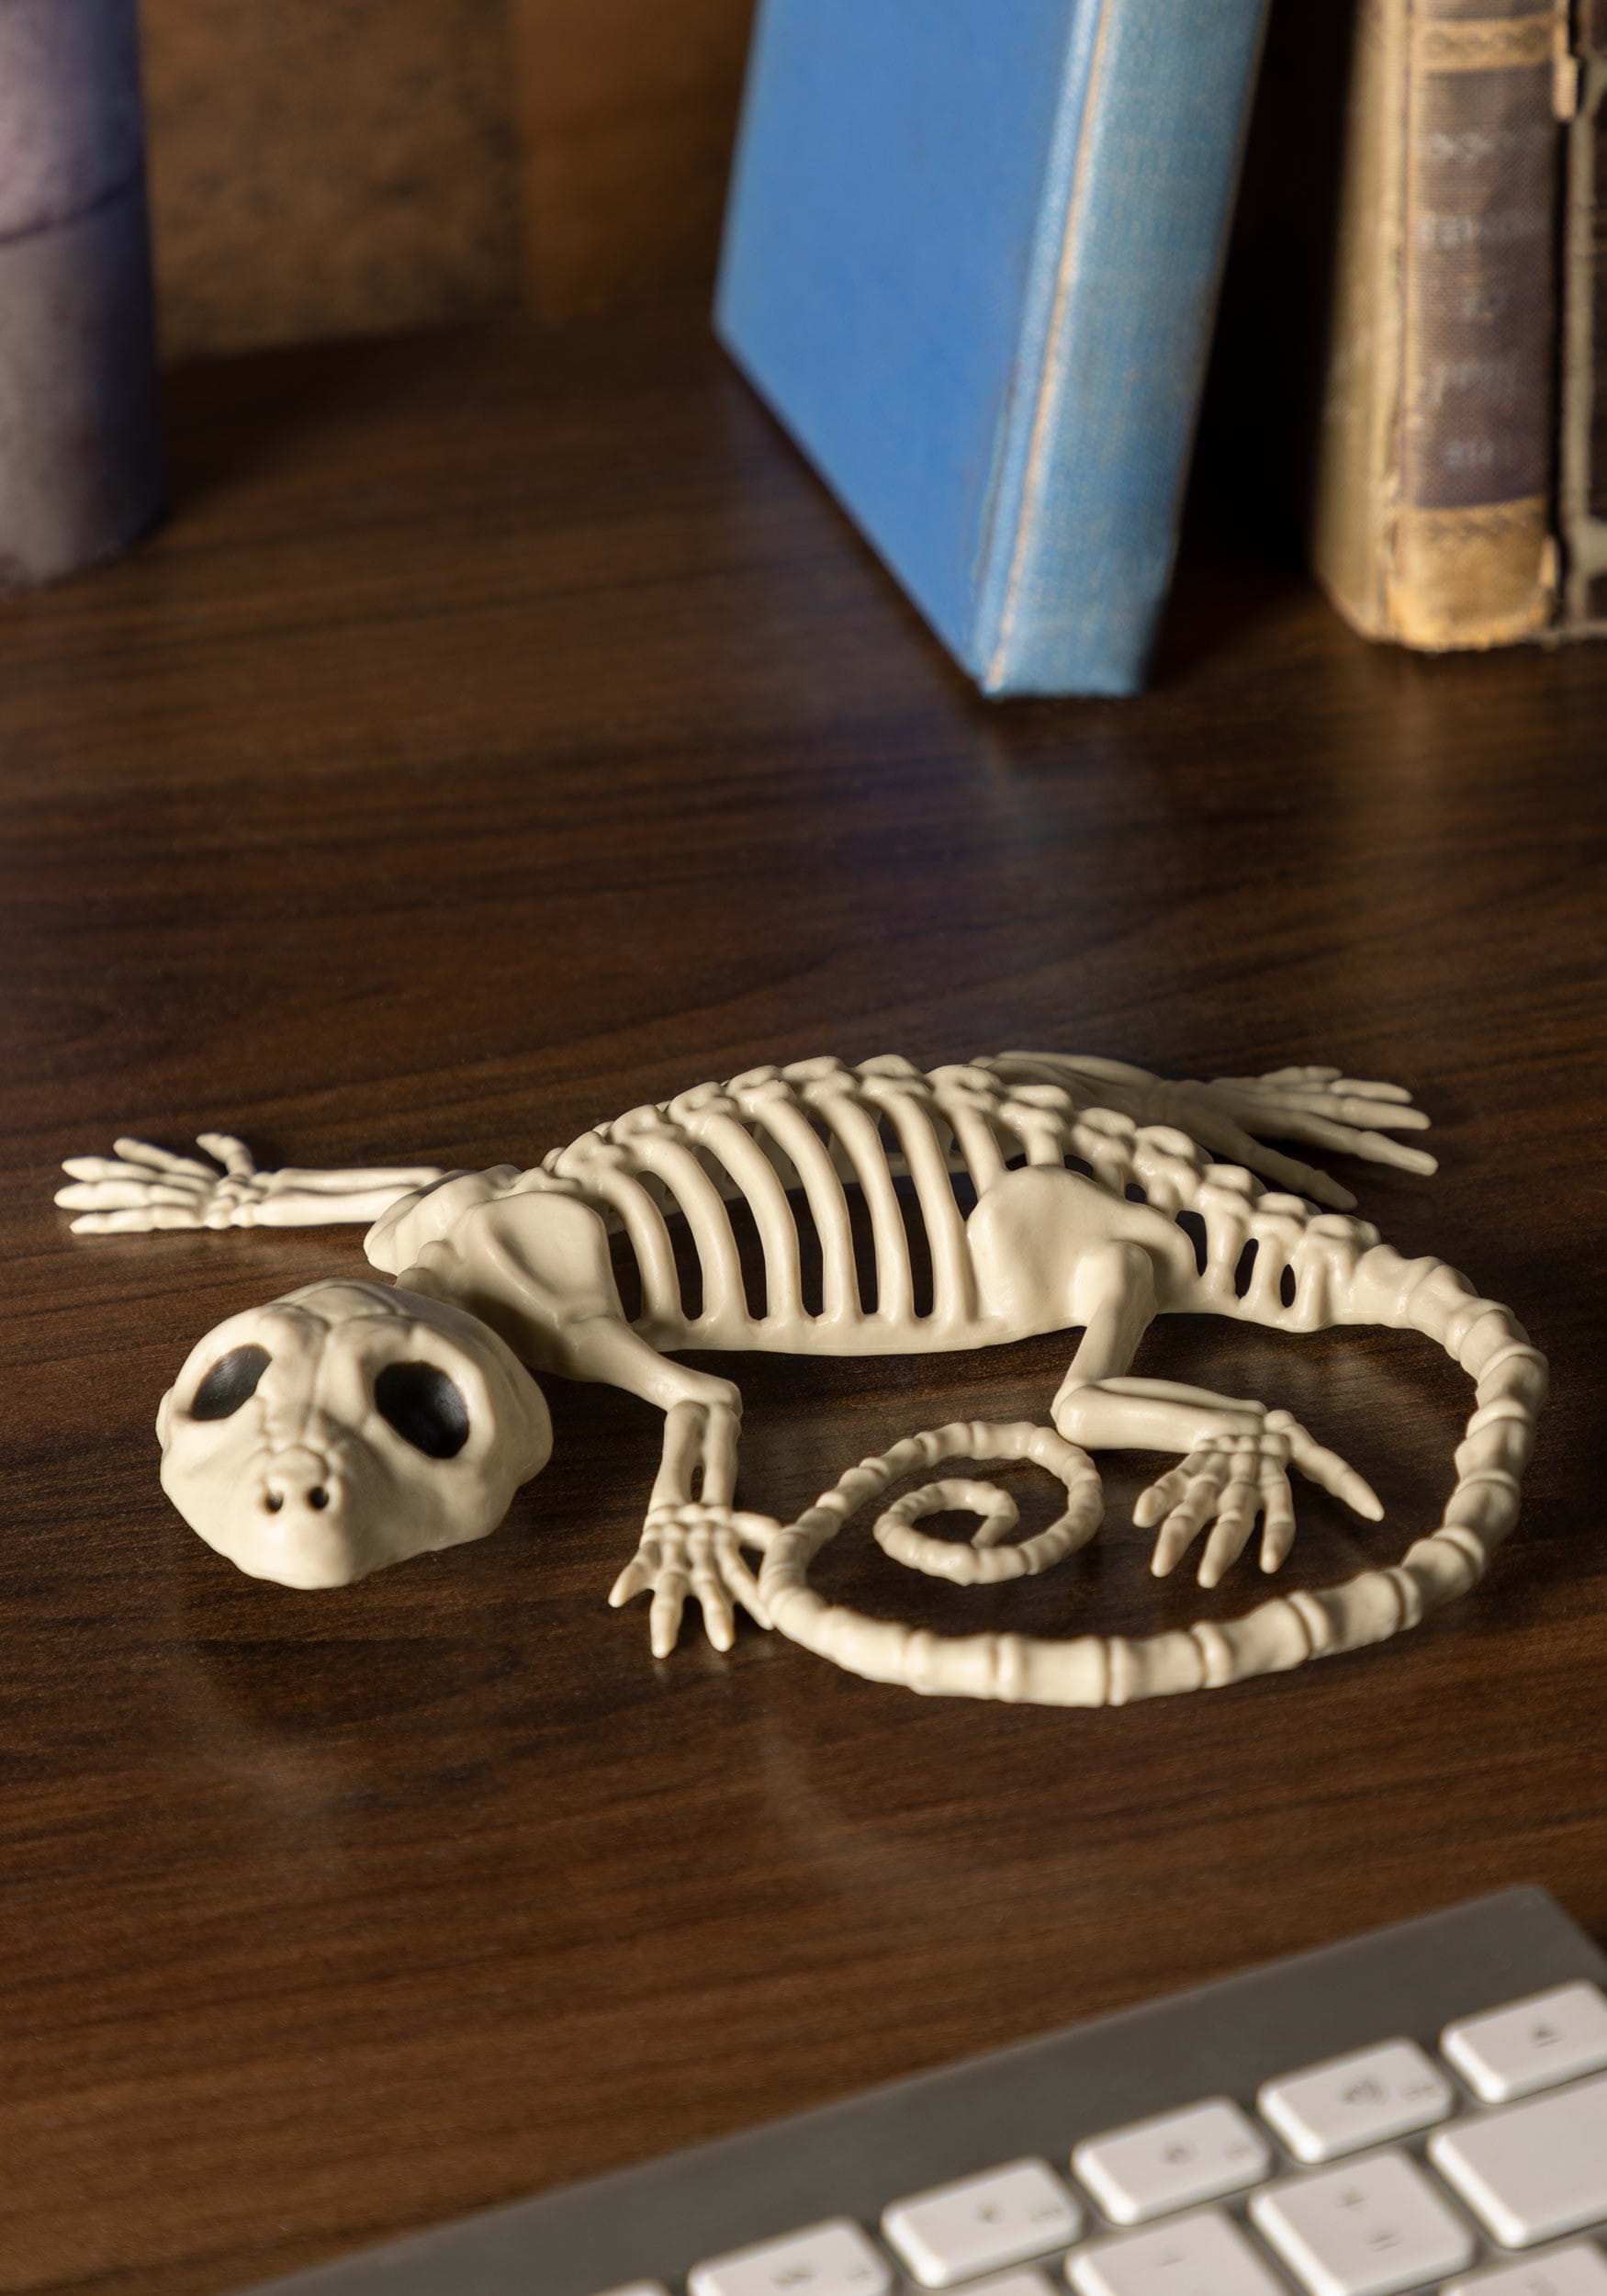 7″ Gecko Skeleton Prop Halloween Decoration